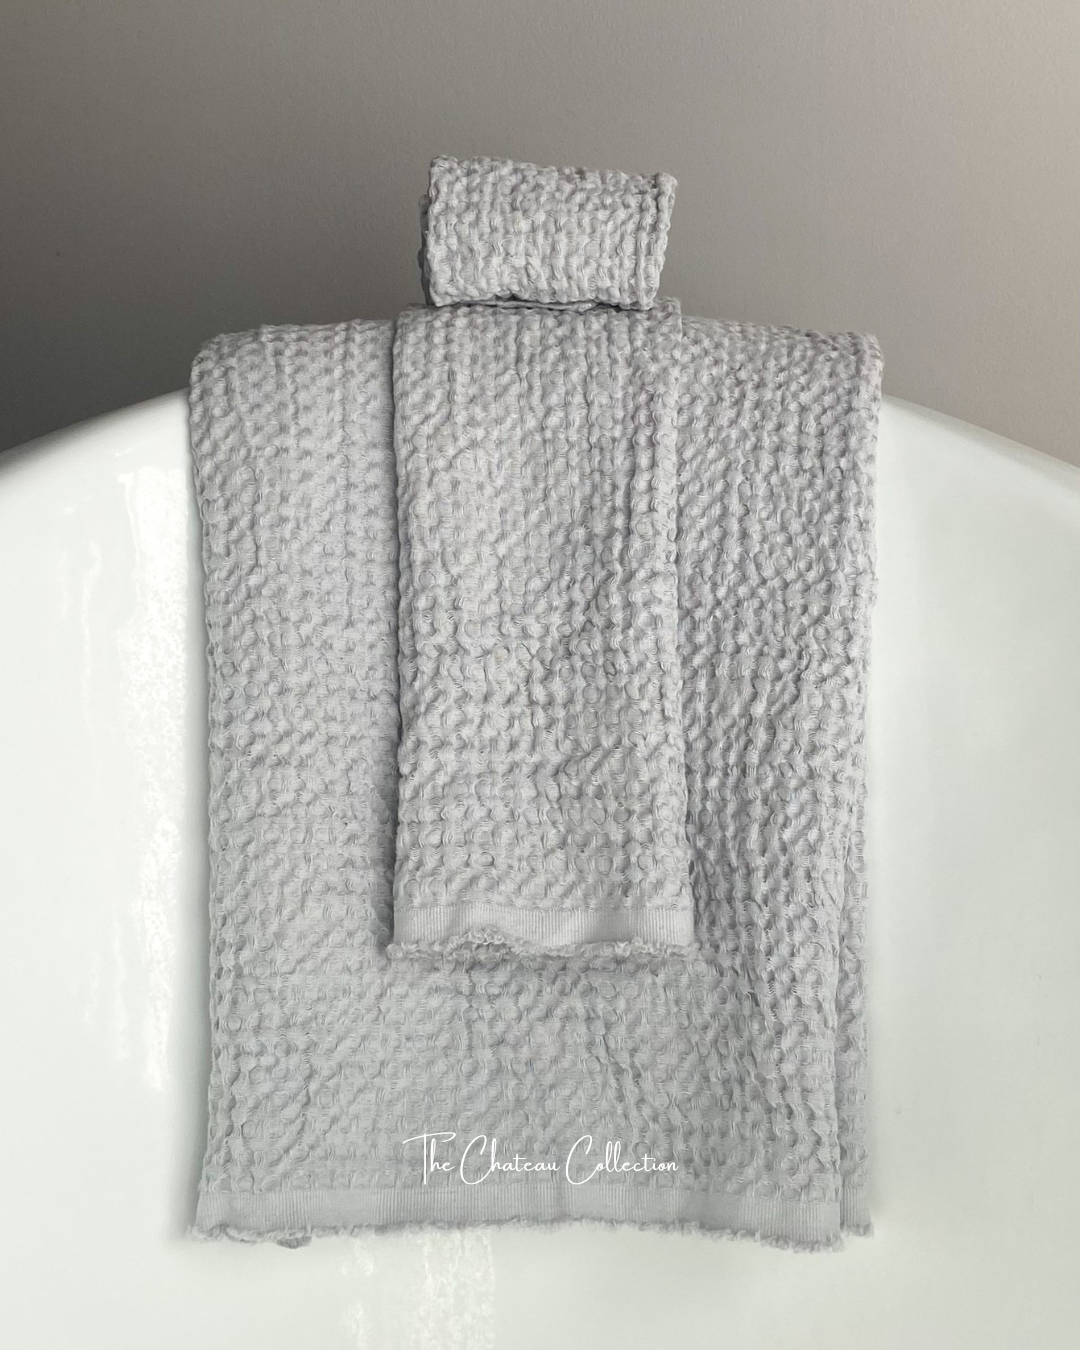 Pure Linen Towel Set of 5 pieces: 2 Large Bath Towels, 2 Hand